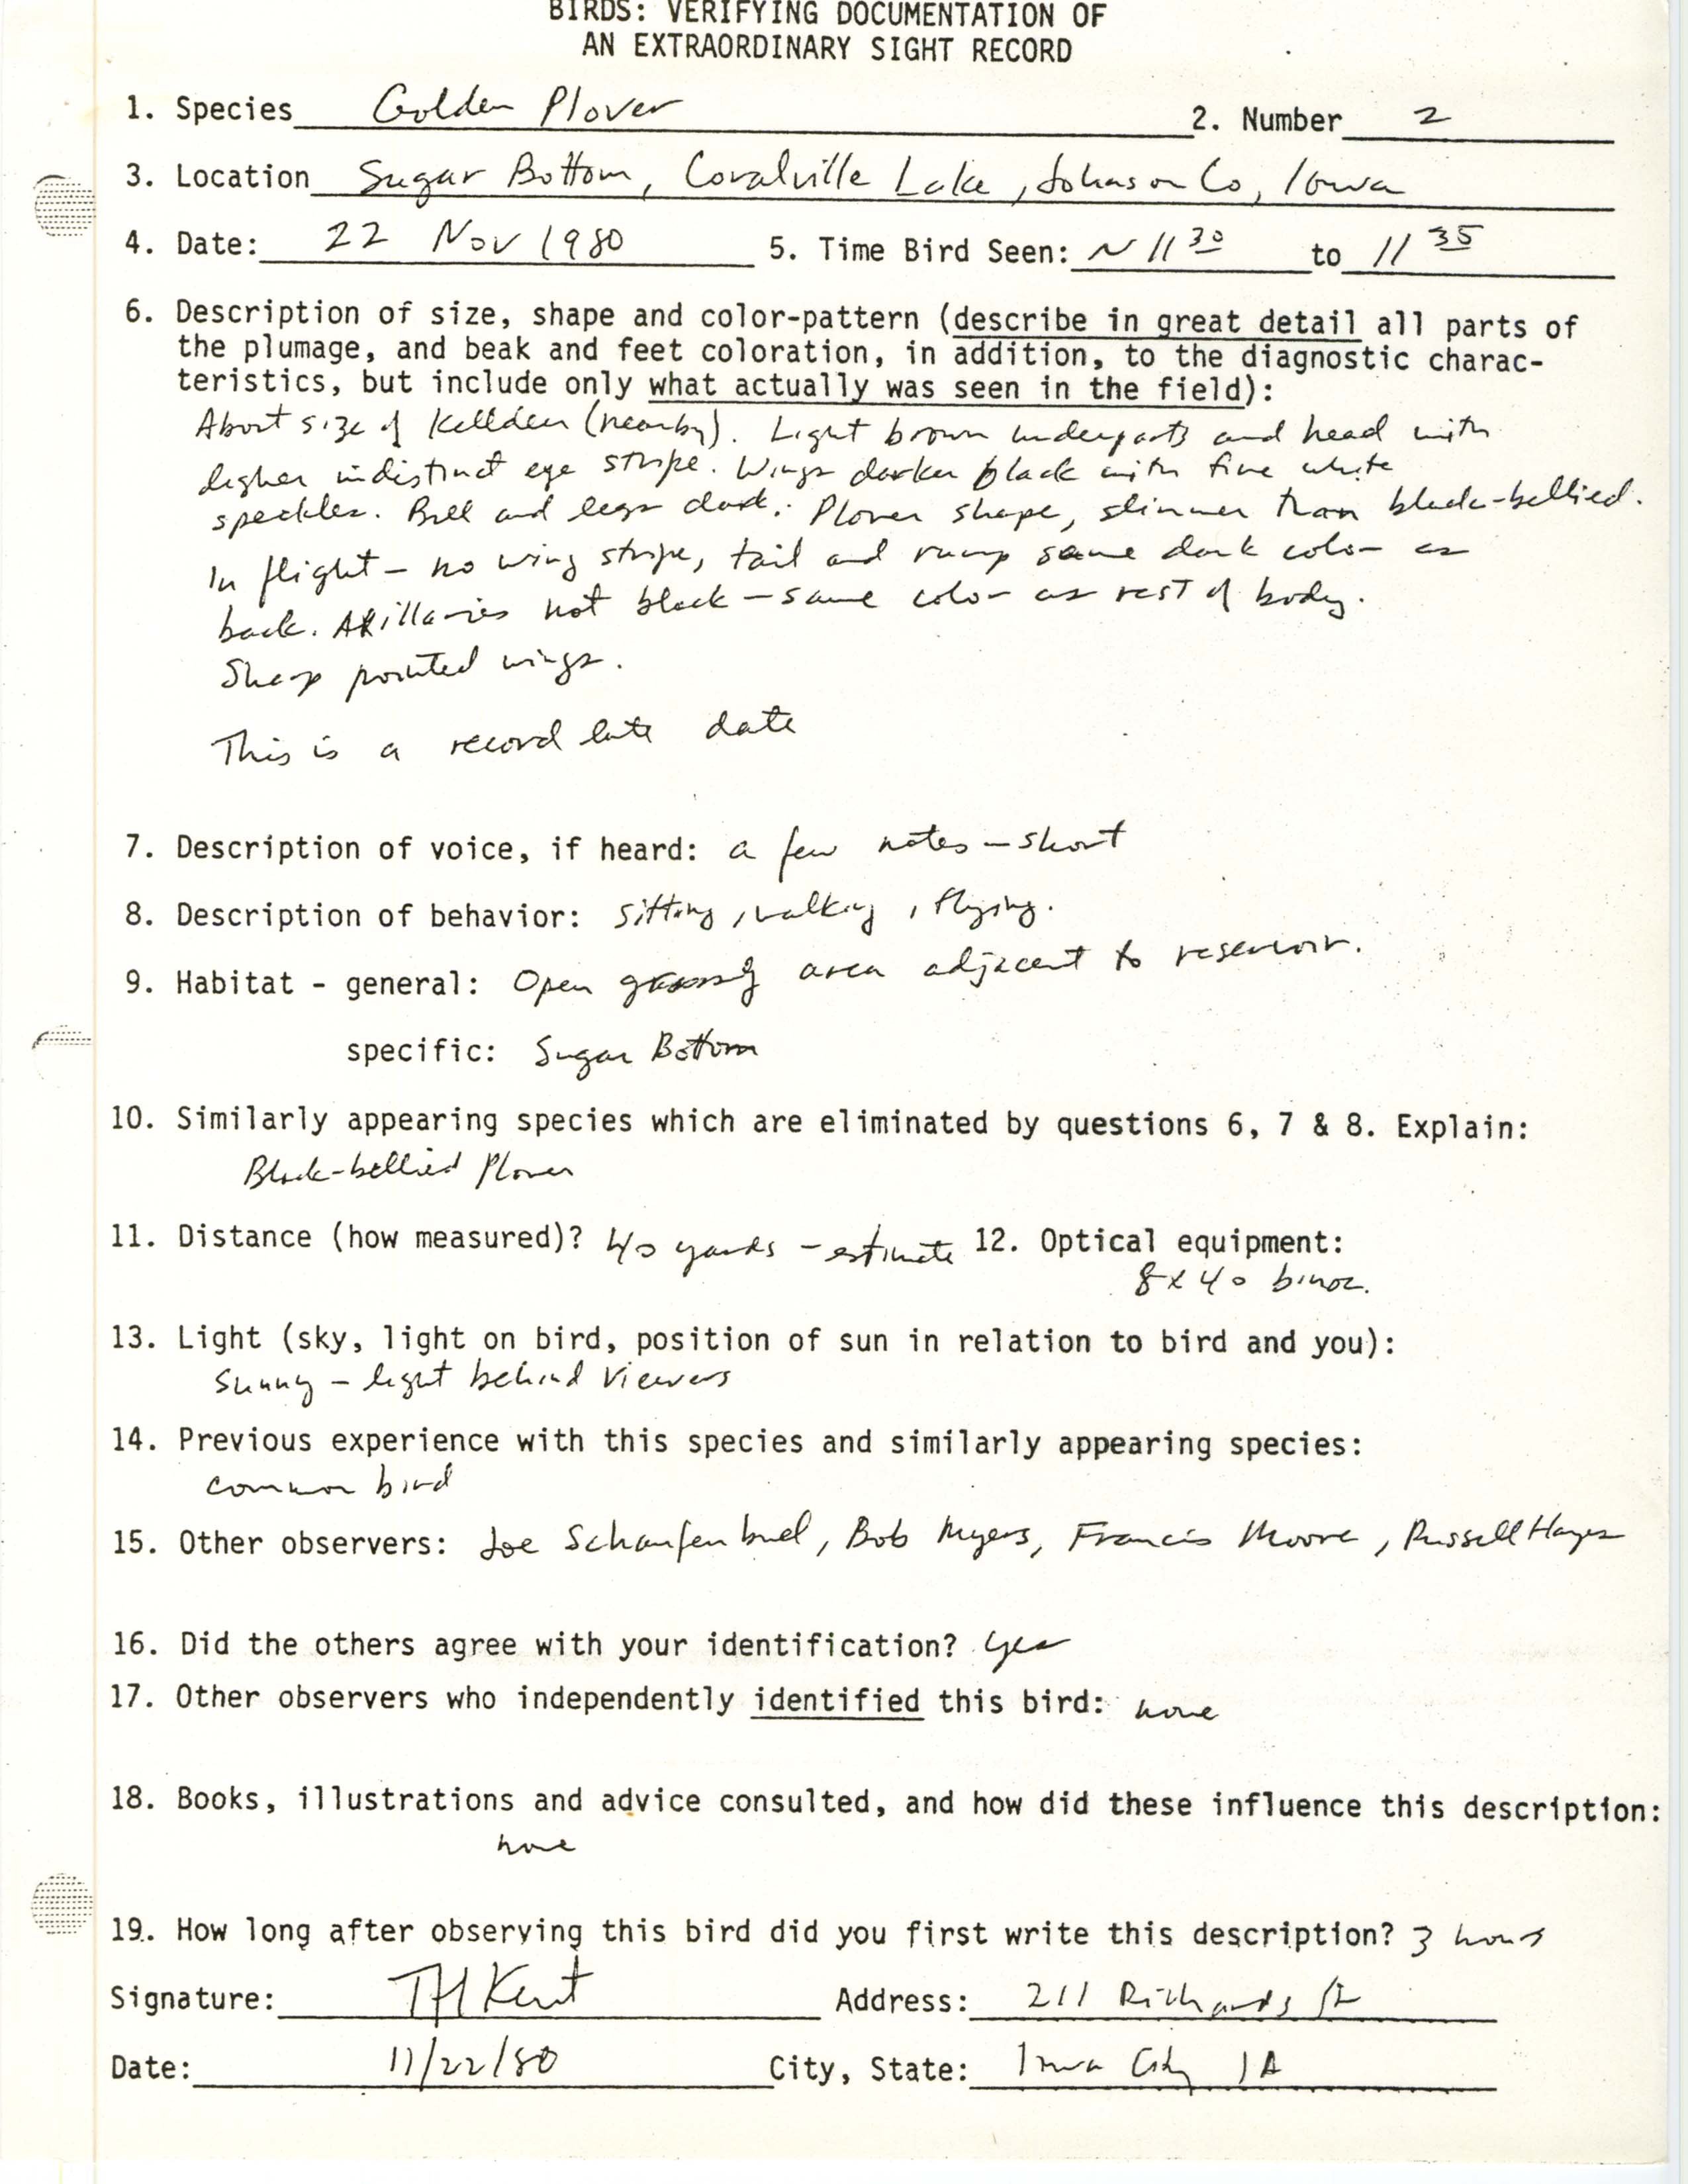 Rare bird documentation form for American Golden-Plover at Sugar Bottom in Coralville Reservoir, 1980